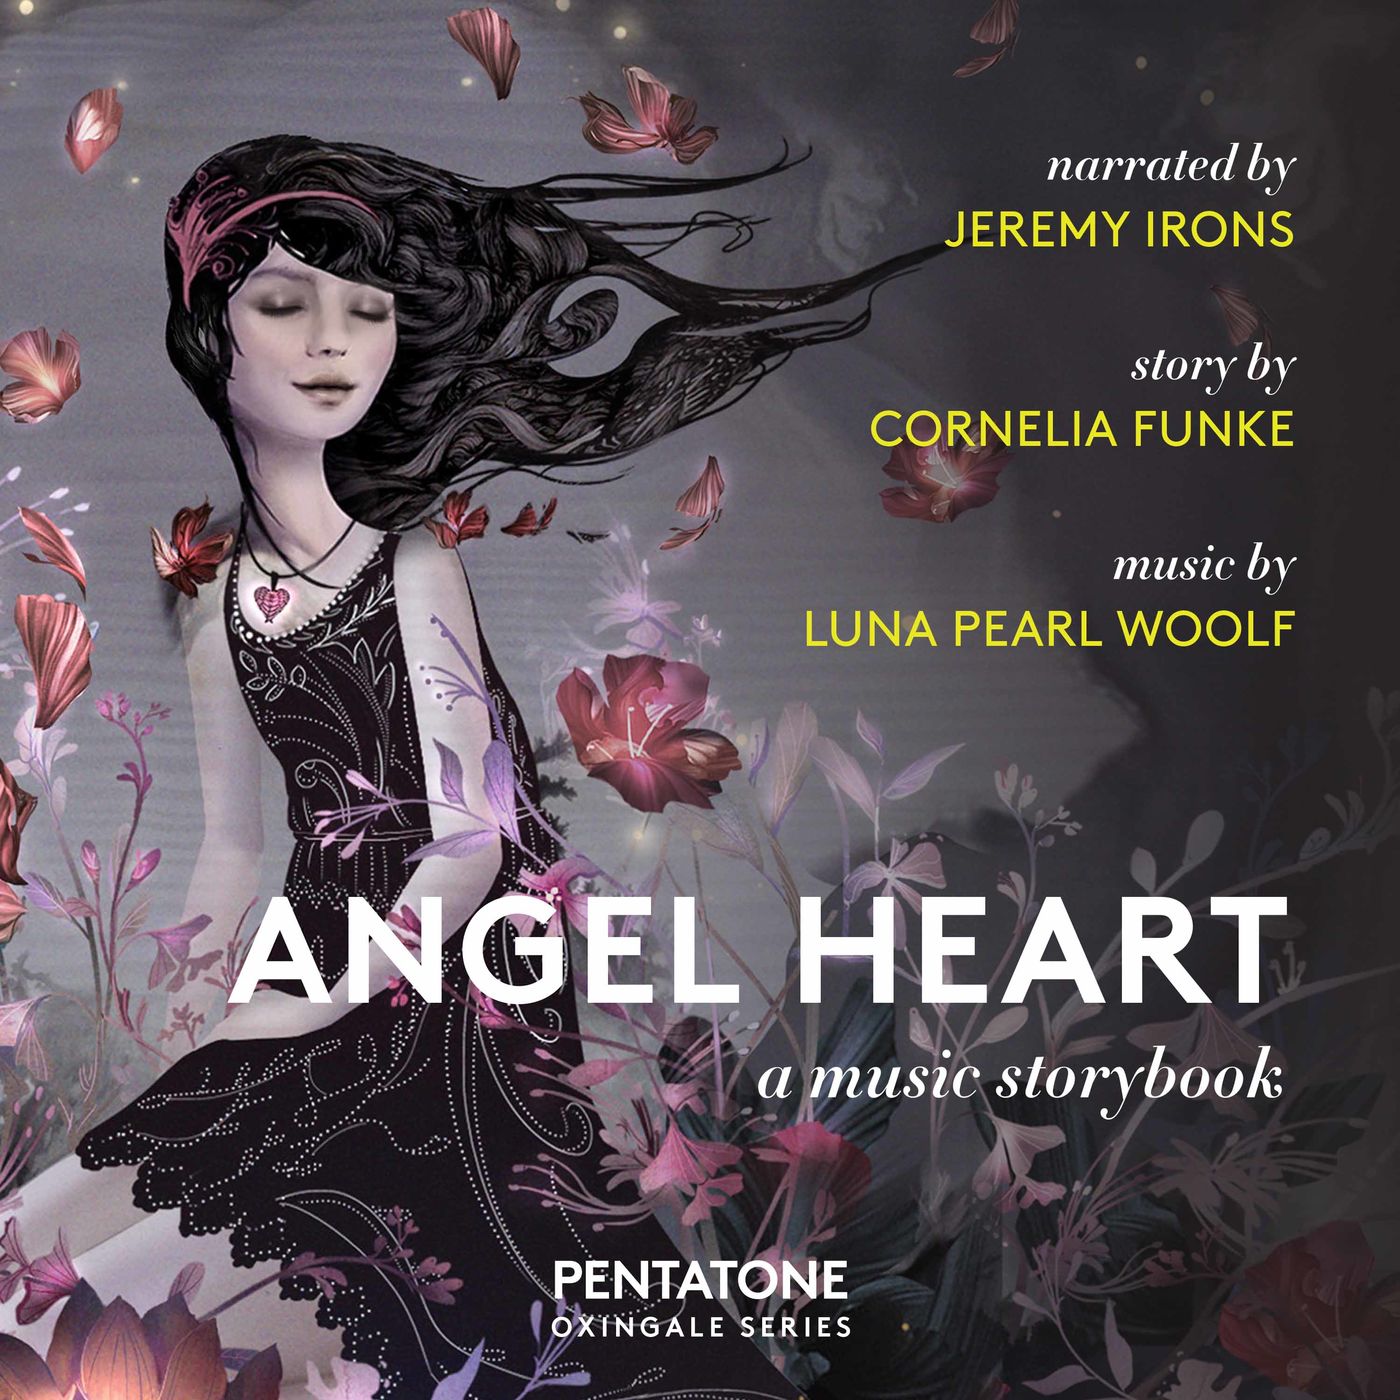 Jeremy Irons, Matt Haimovitz & Uccello - Angel Heart: A Music Storybook (2018) [FLAC 24bit/96kHz]